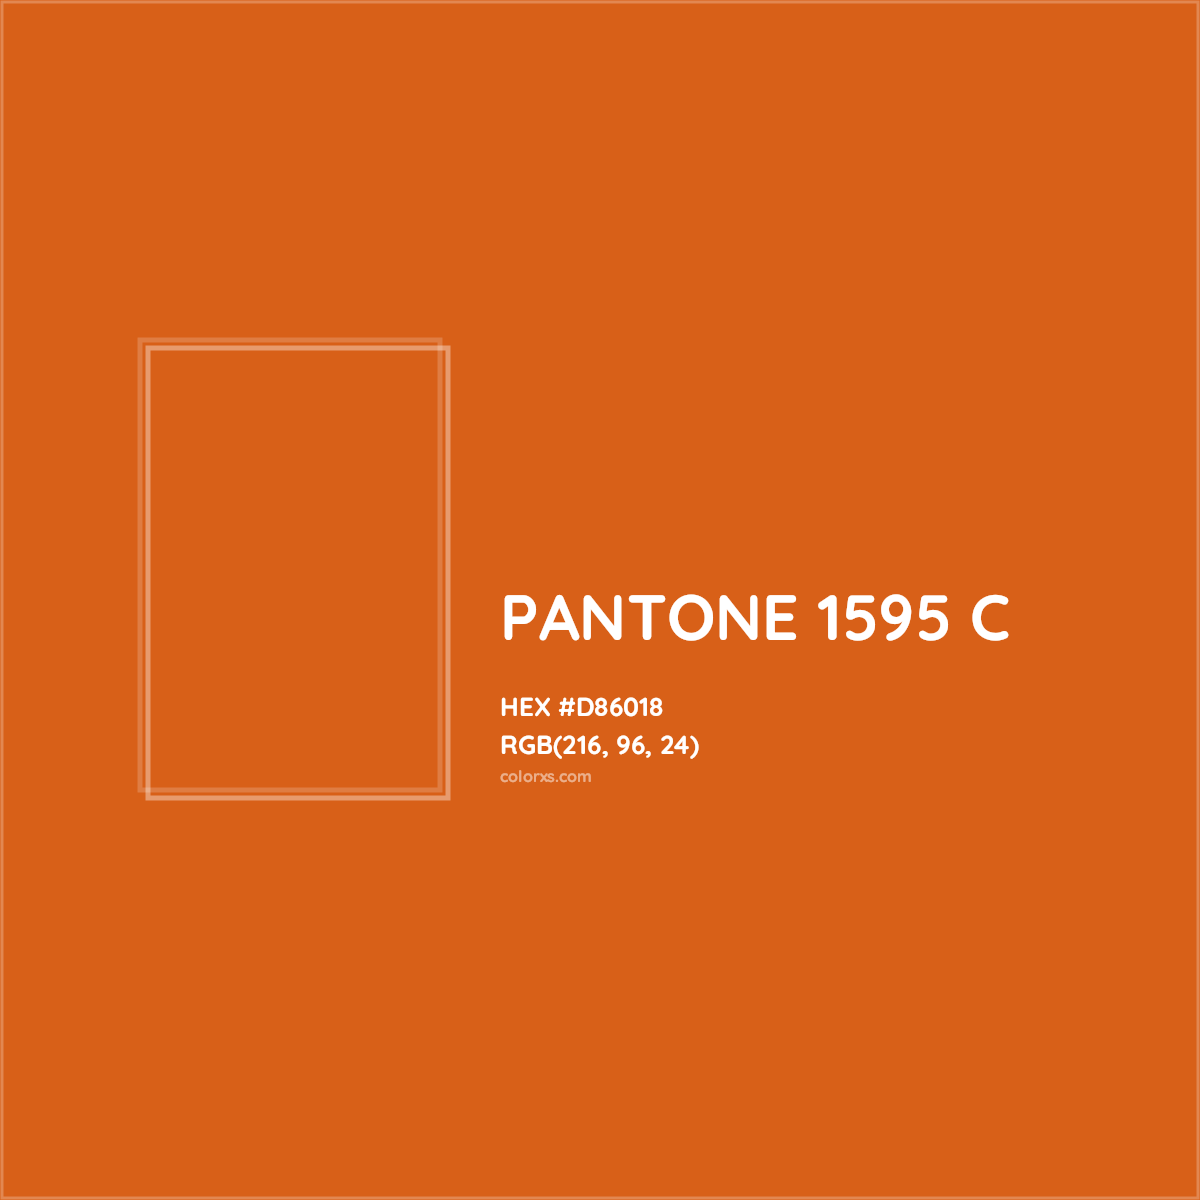 HEX #D86018 PANTONE 1595 C CMS Pantone PMS - Color Code